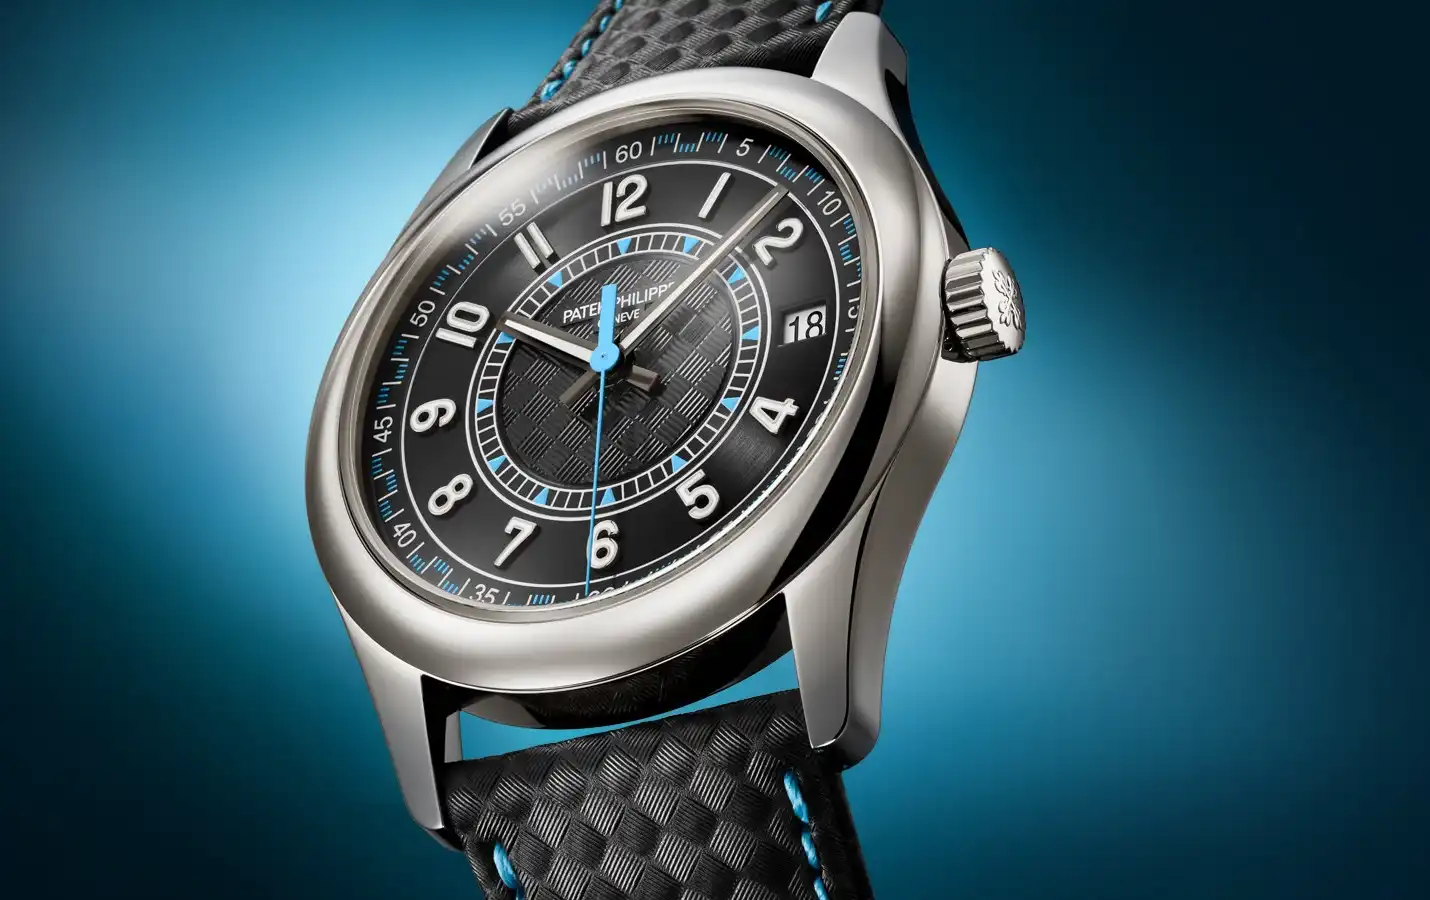 Reloj Patek Philippe precio 6007G-011 WatchProject 21